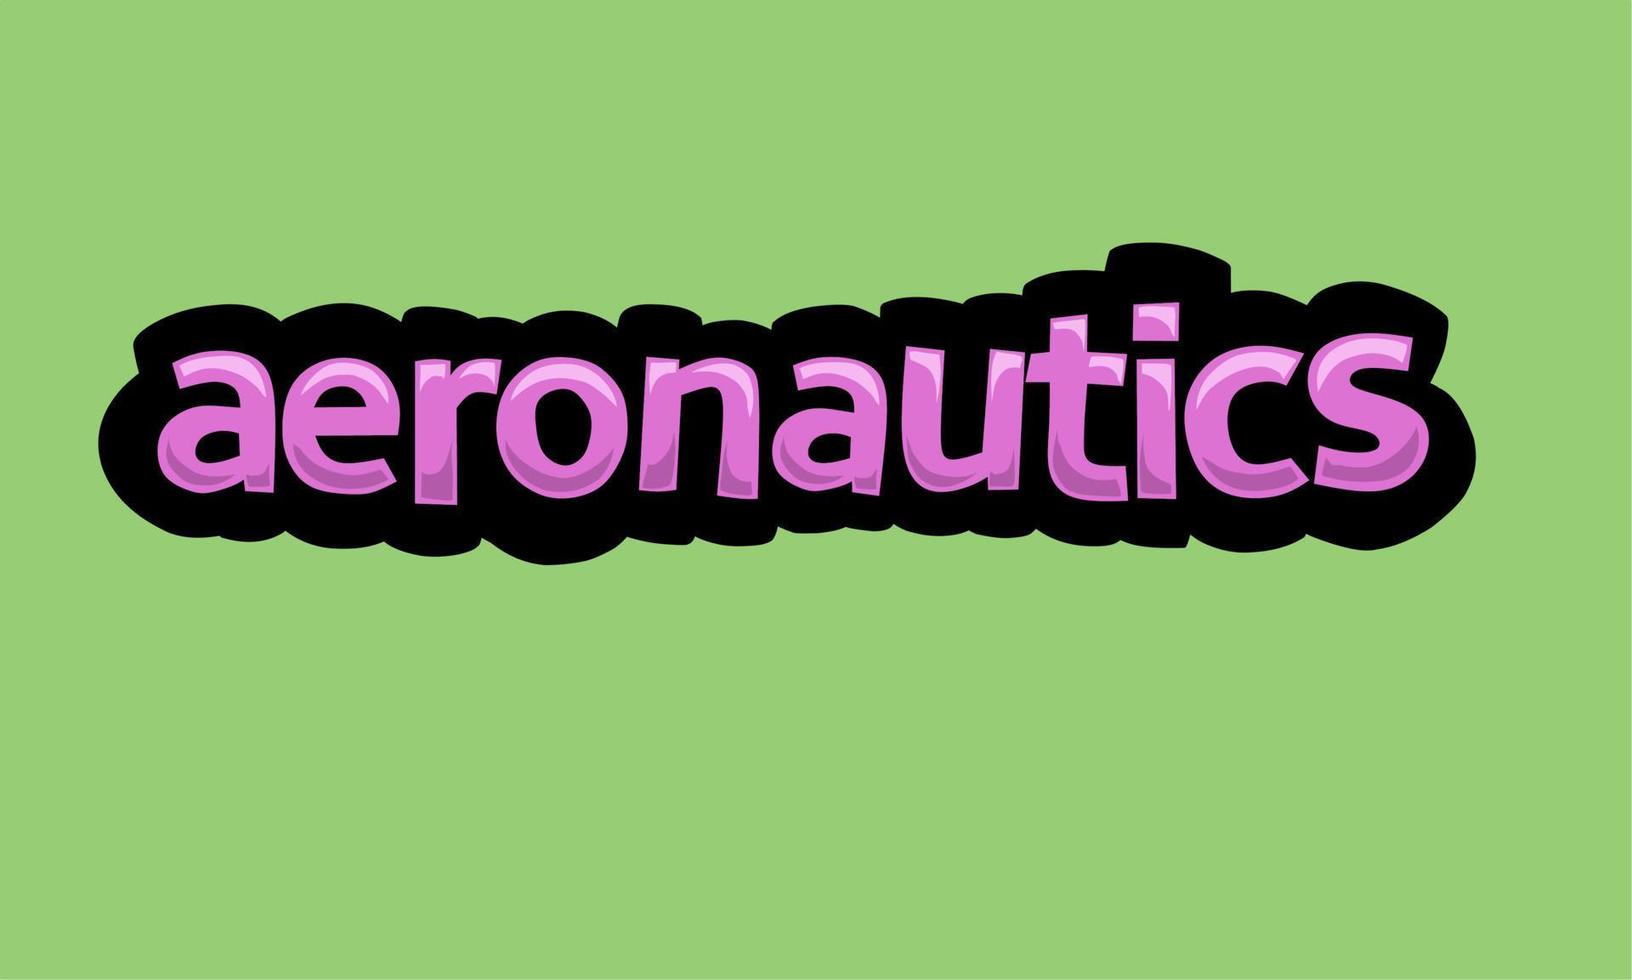 AERONAUTICS writing vector design on a green background